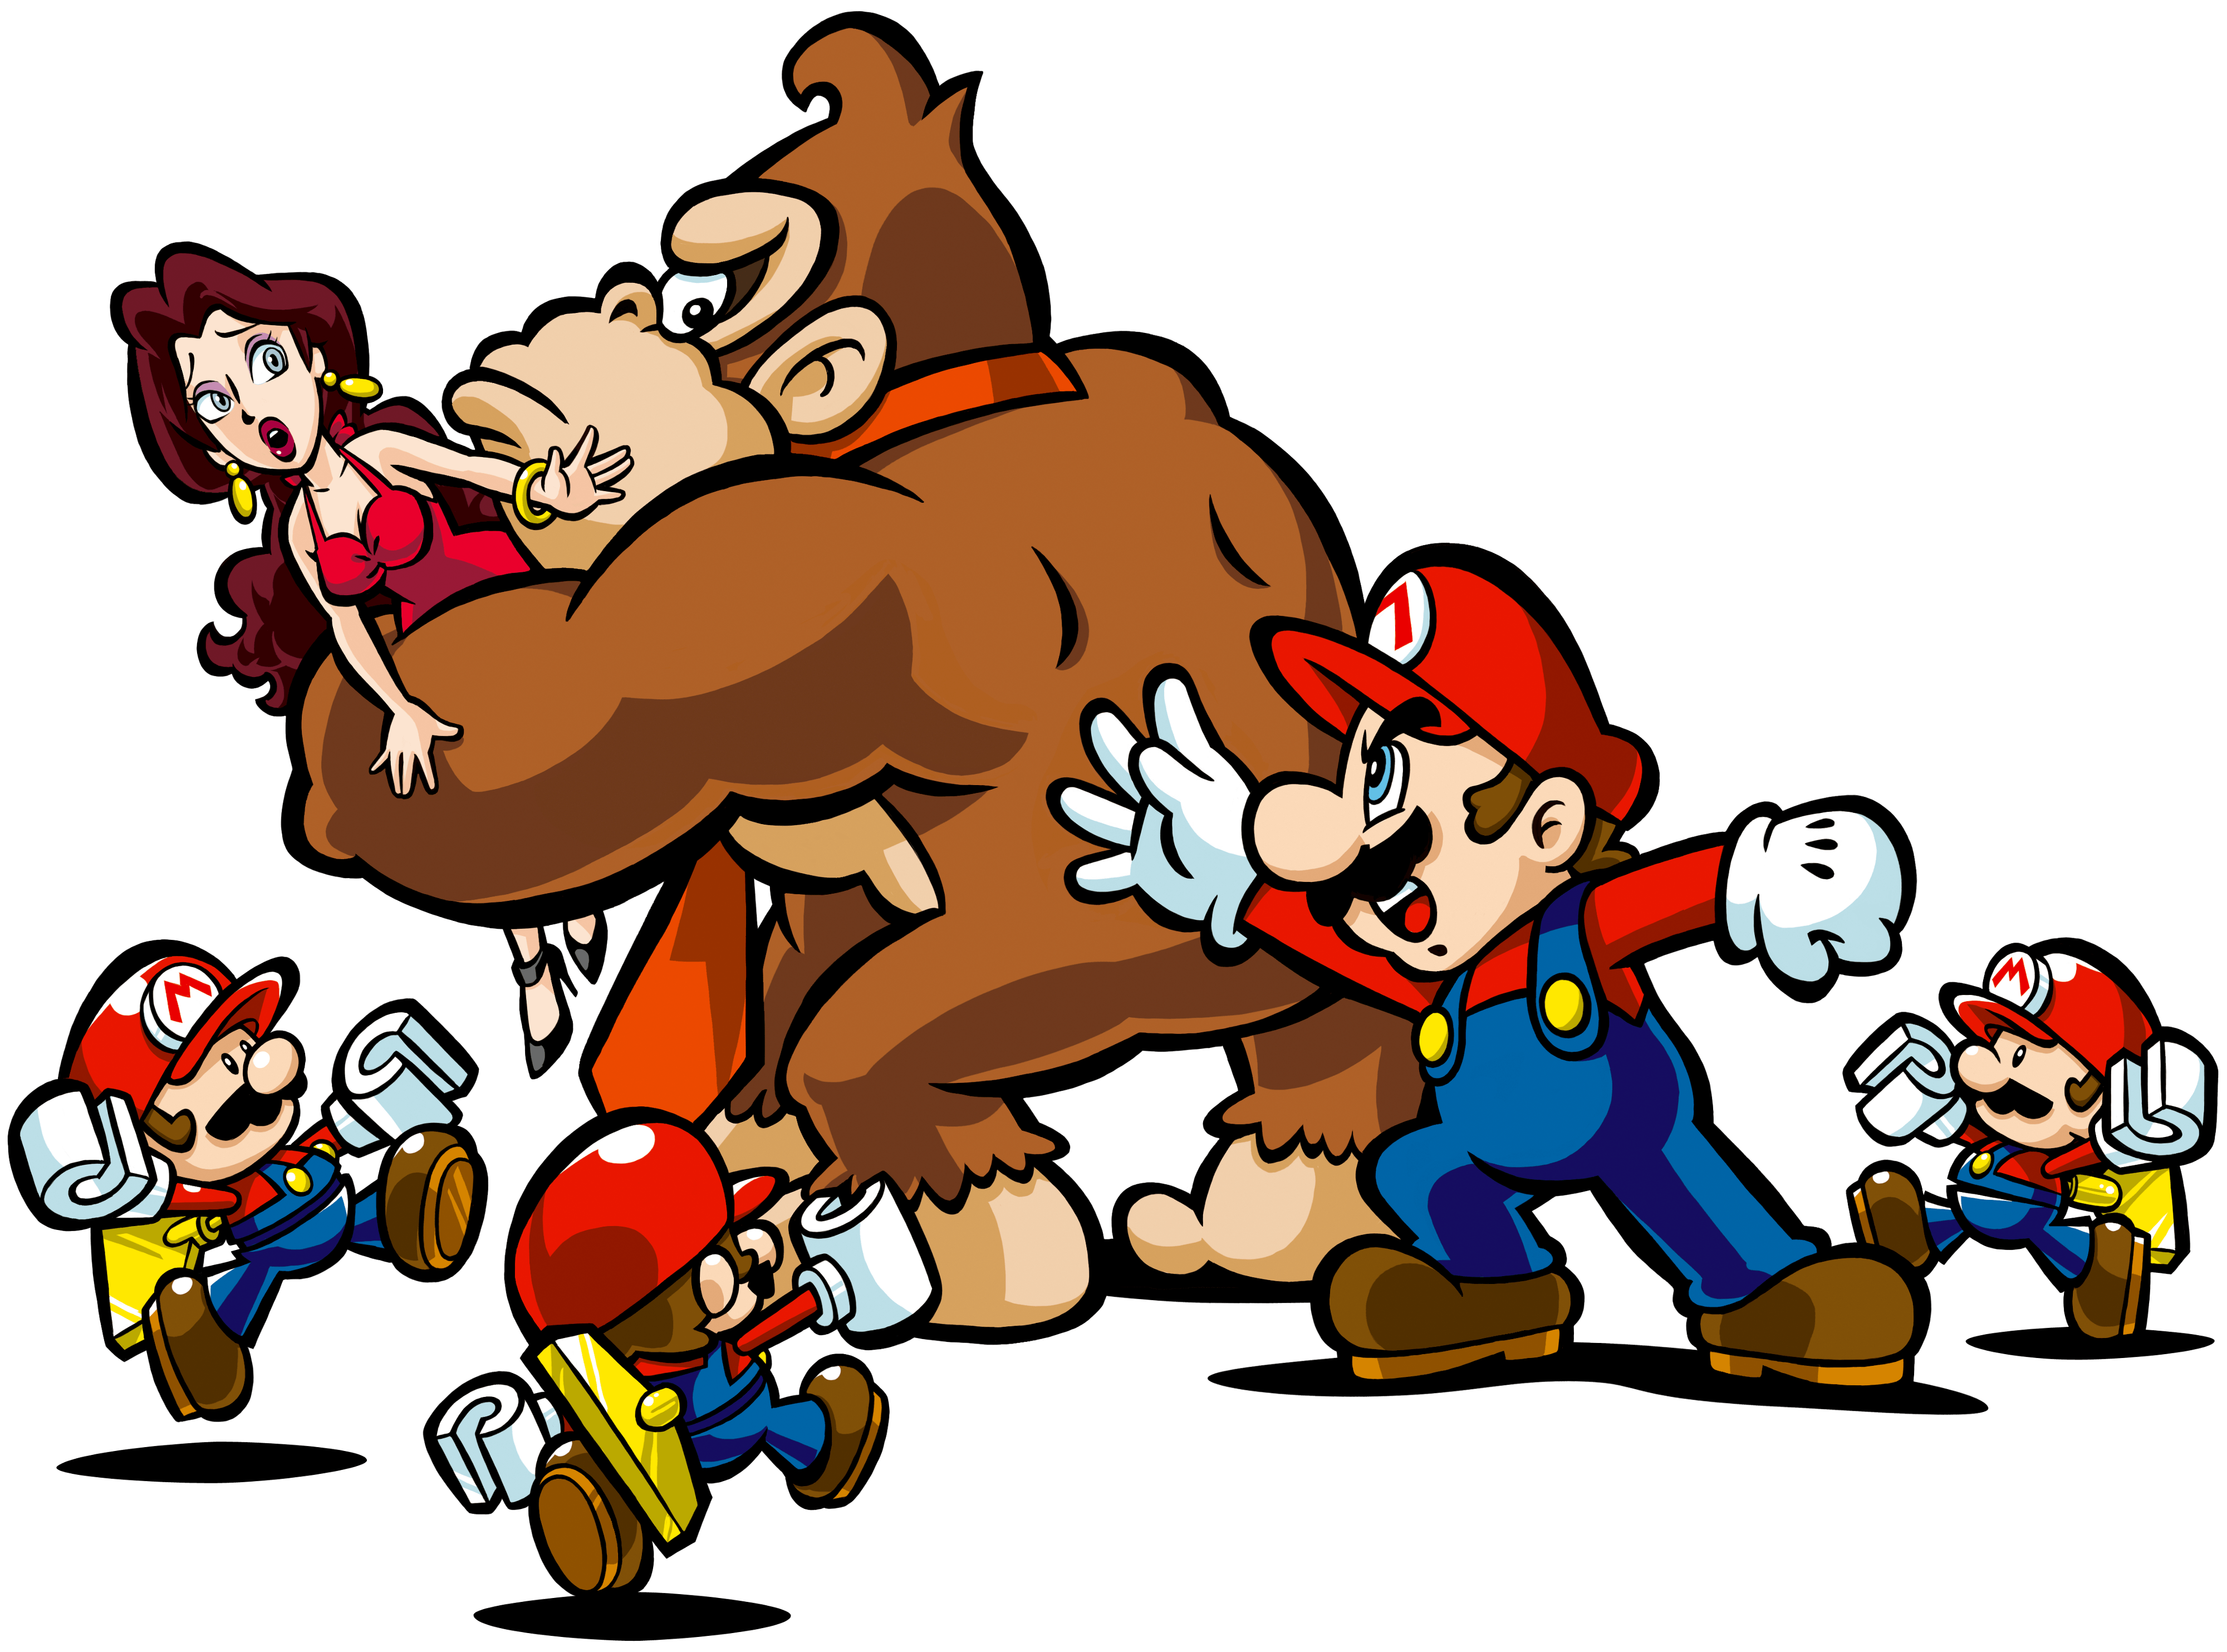 Mario vs. Donkey Kong Box Art Recreation - Finished Projects - Blender  Artists Community